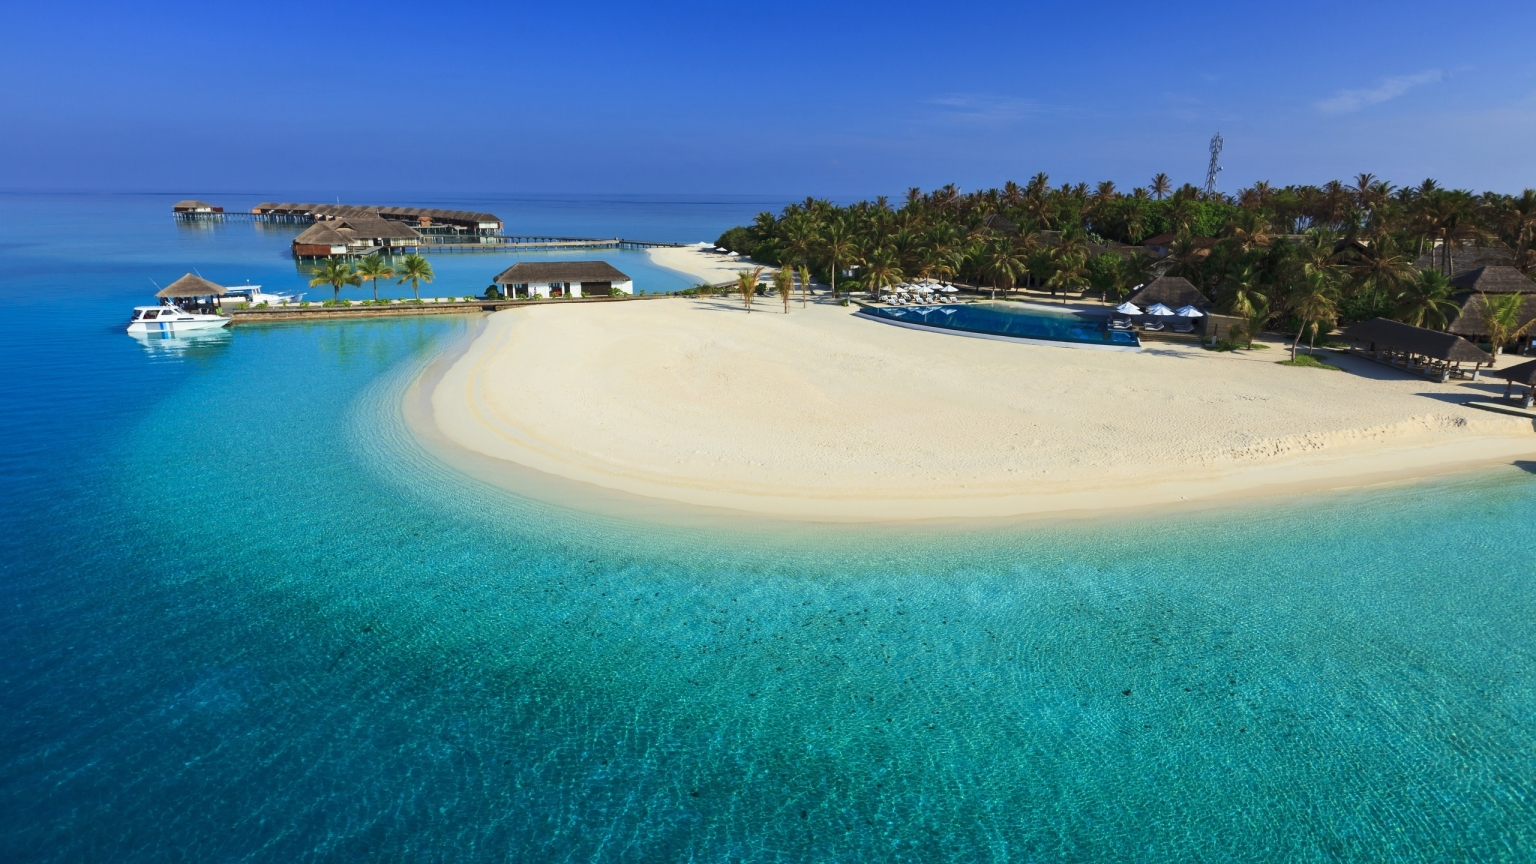 Maldives Luxury Resort for 1536 x 864 HDTV resolution